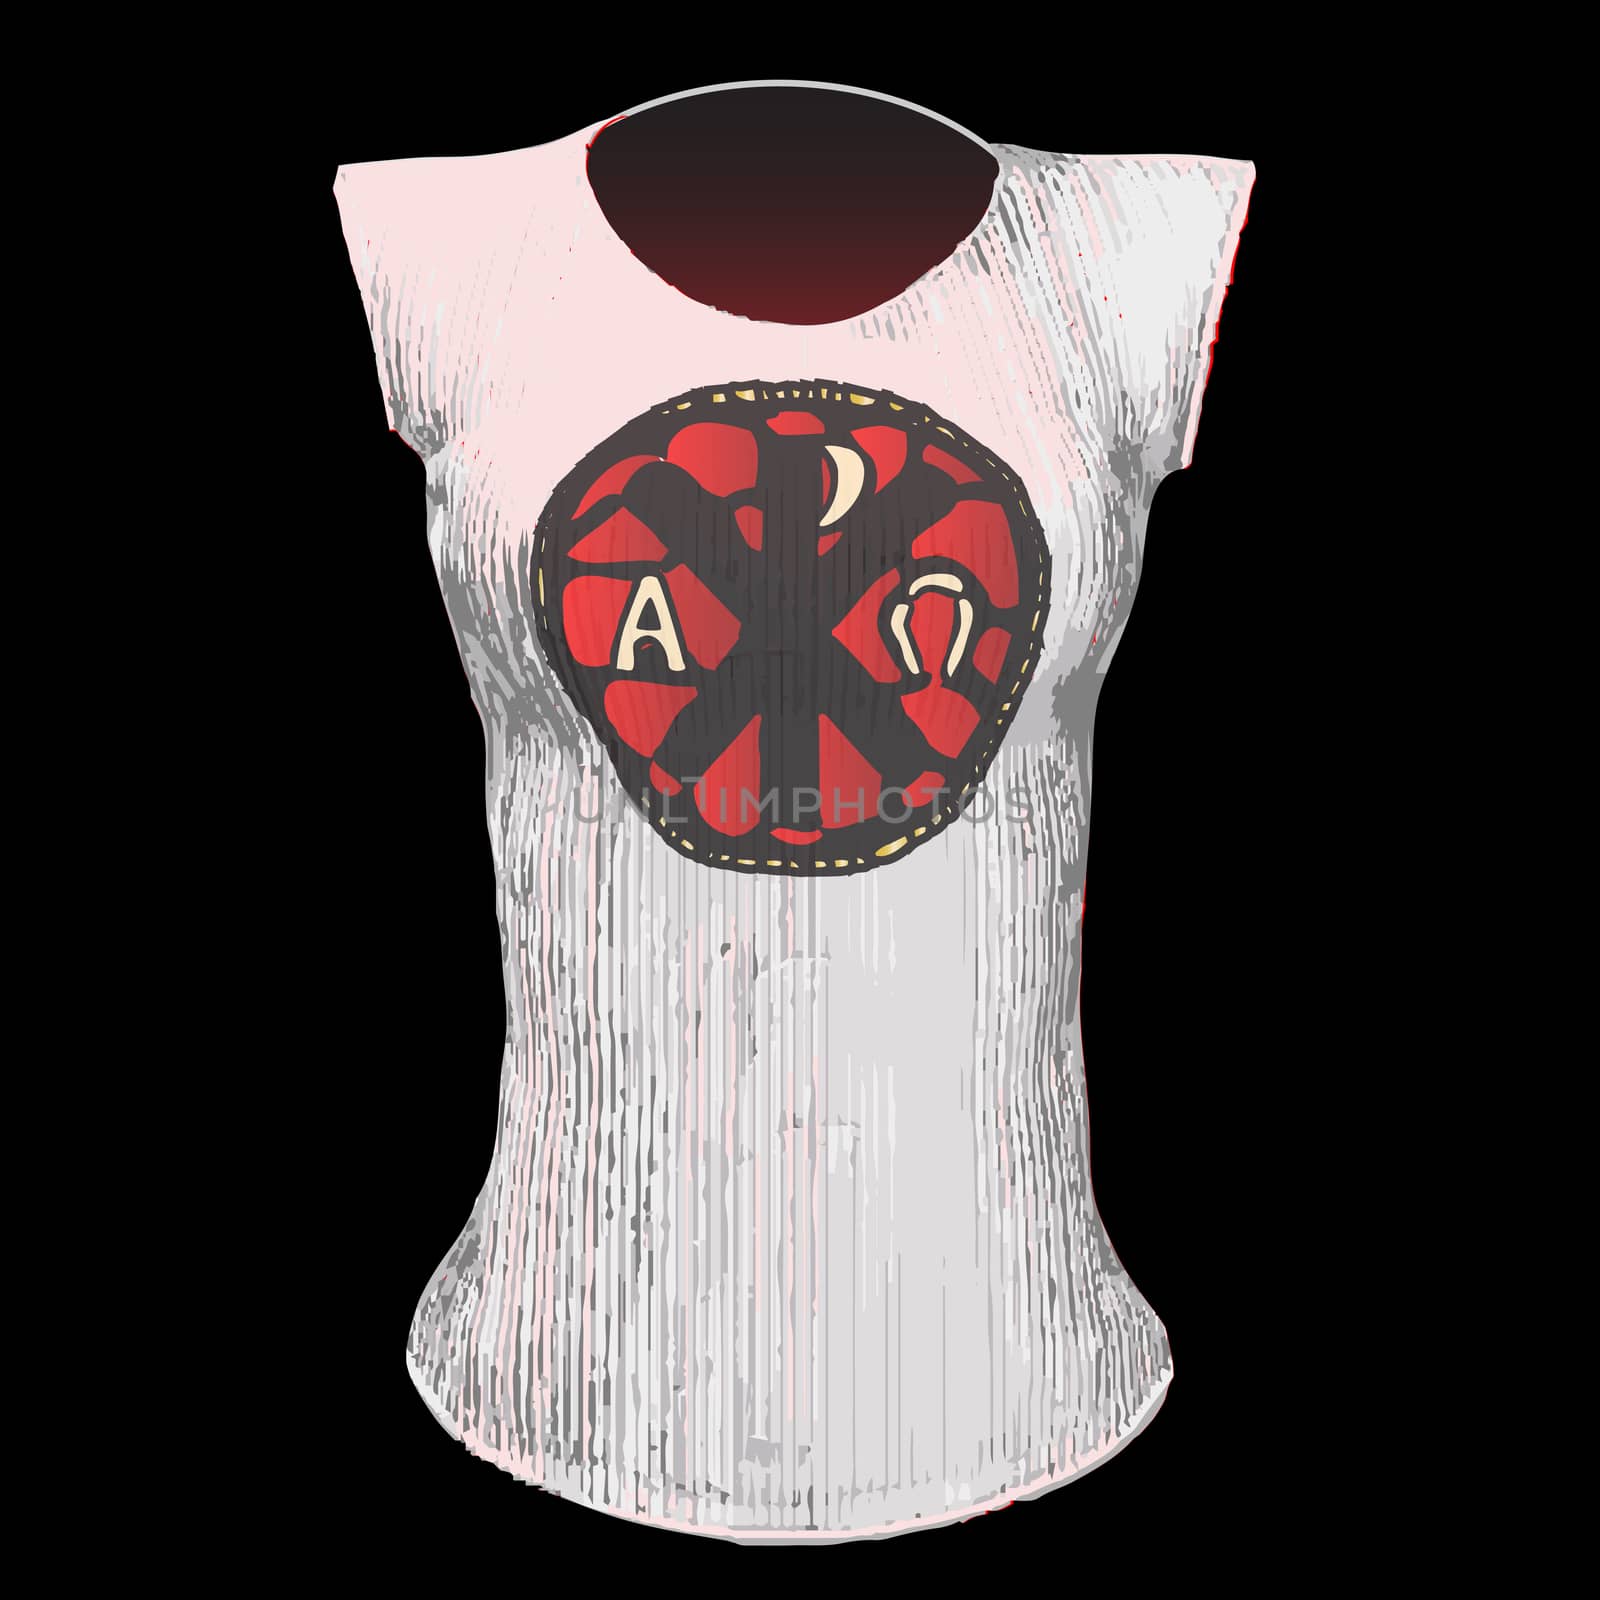 The Alpha Onega sign as a T shirt design